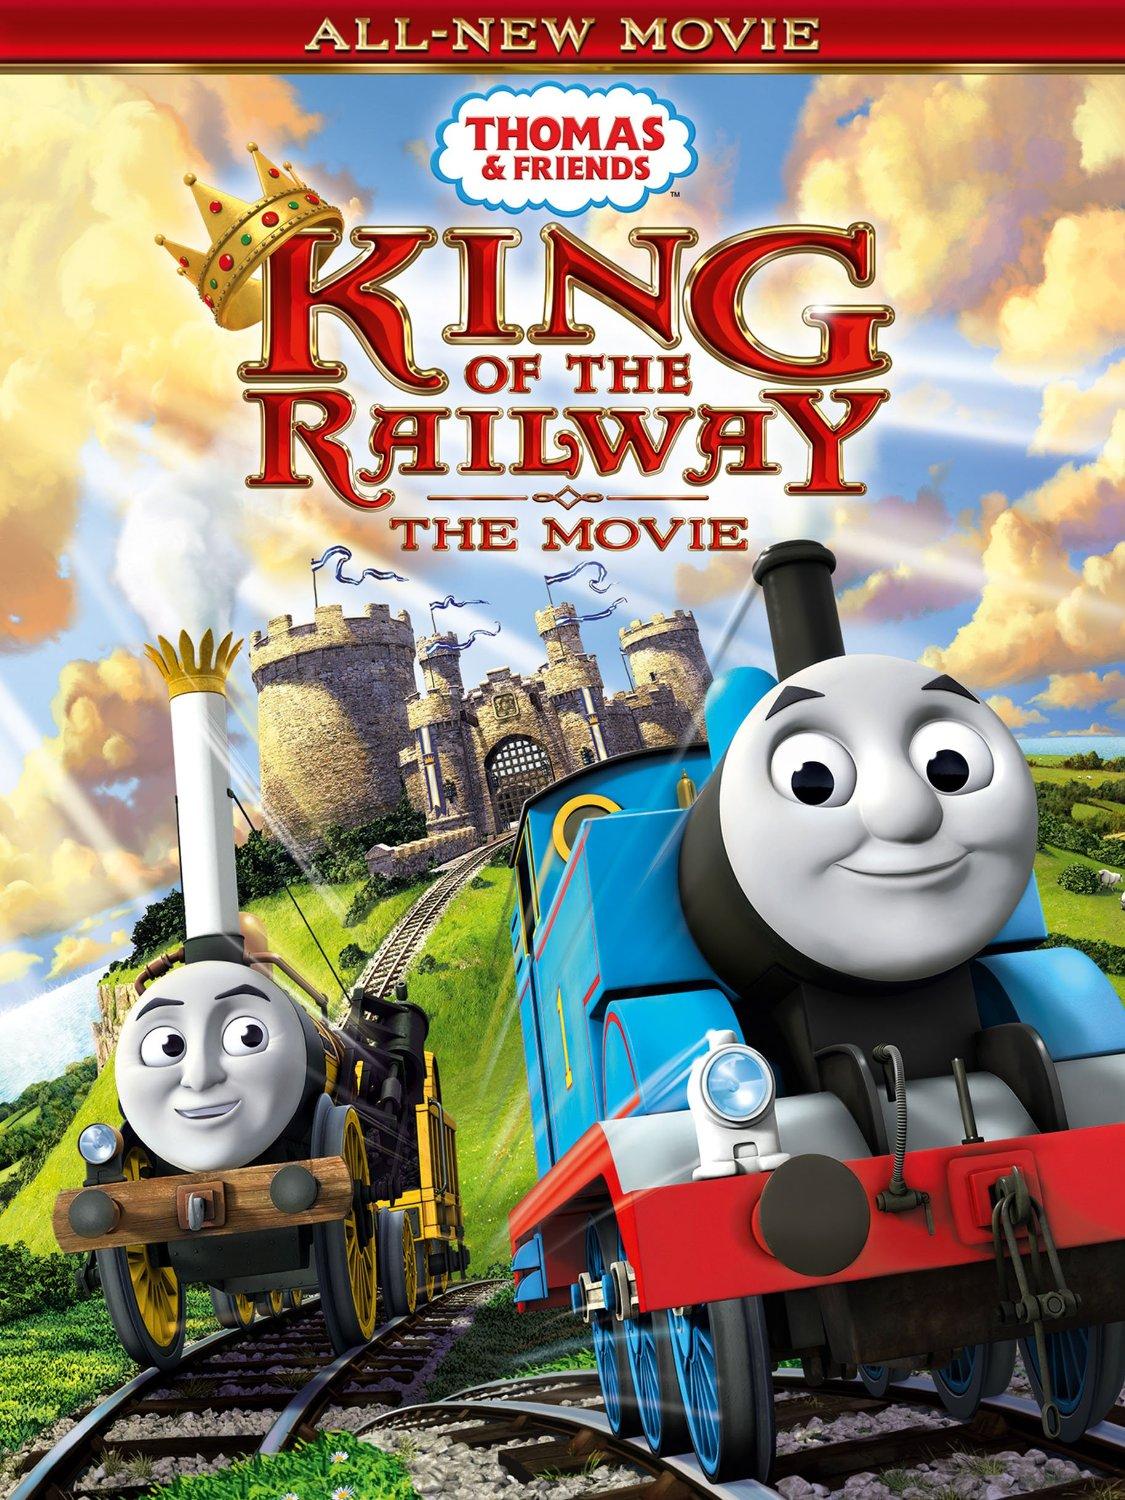 Thomas And The Magic Railroad Image, Picture, Photo